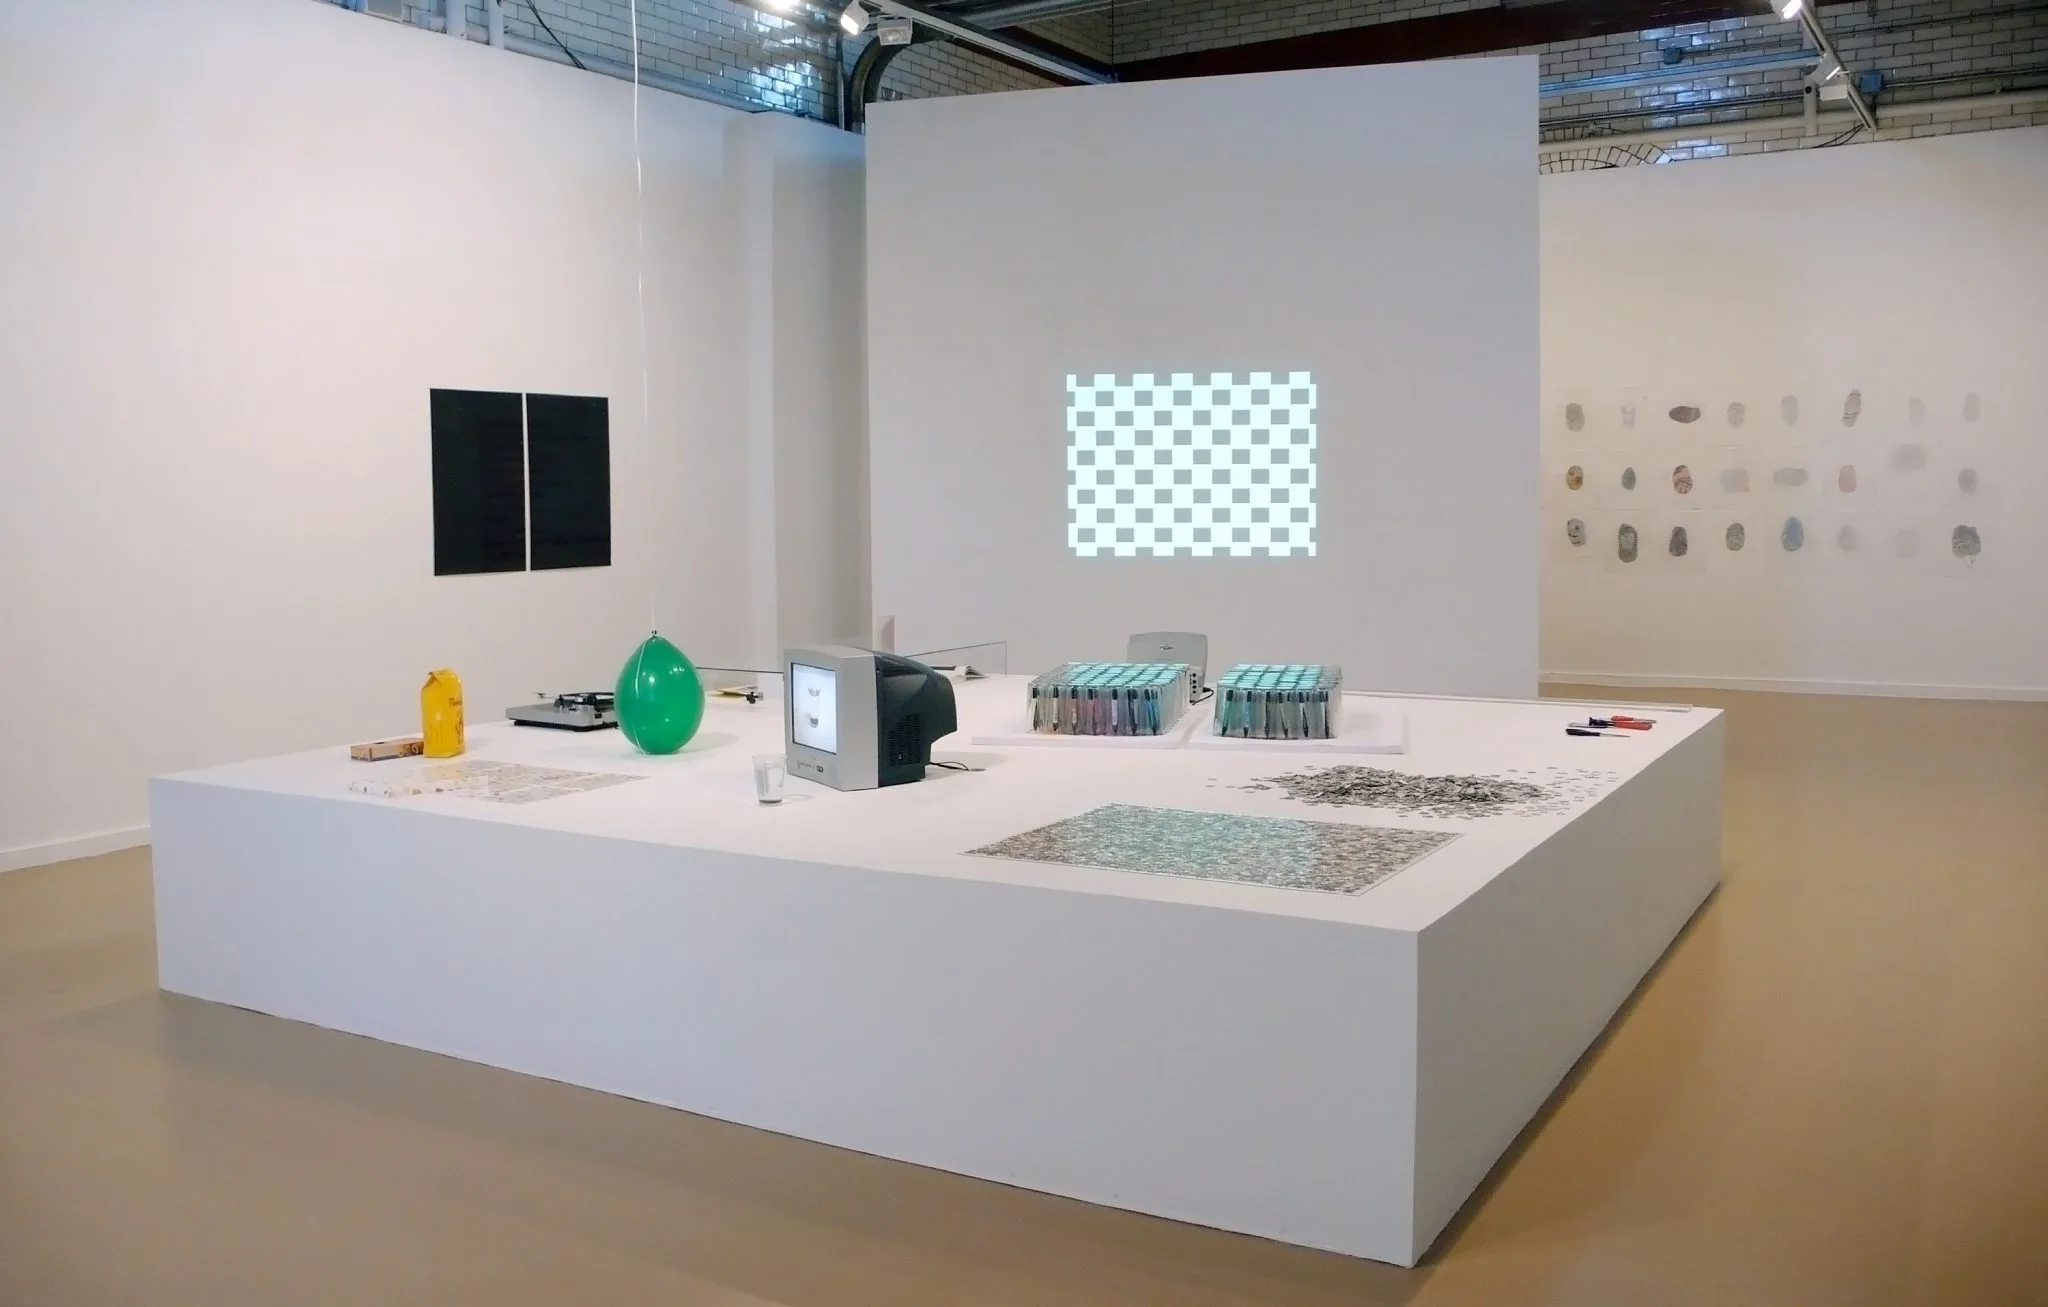 Installation view, "Daniel Eatock: Extra Medium", 2008, Spruance Gallery